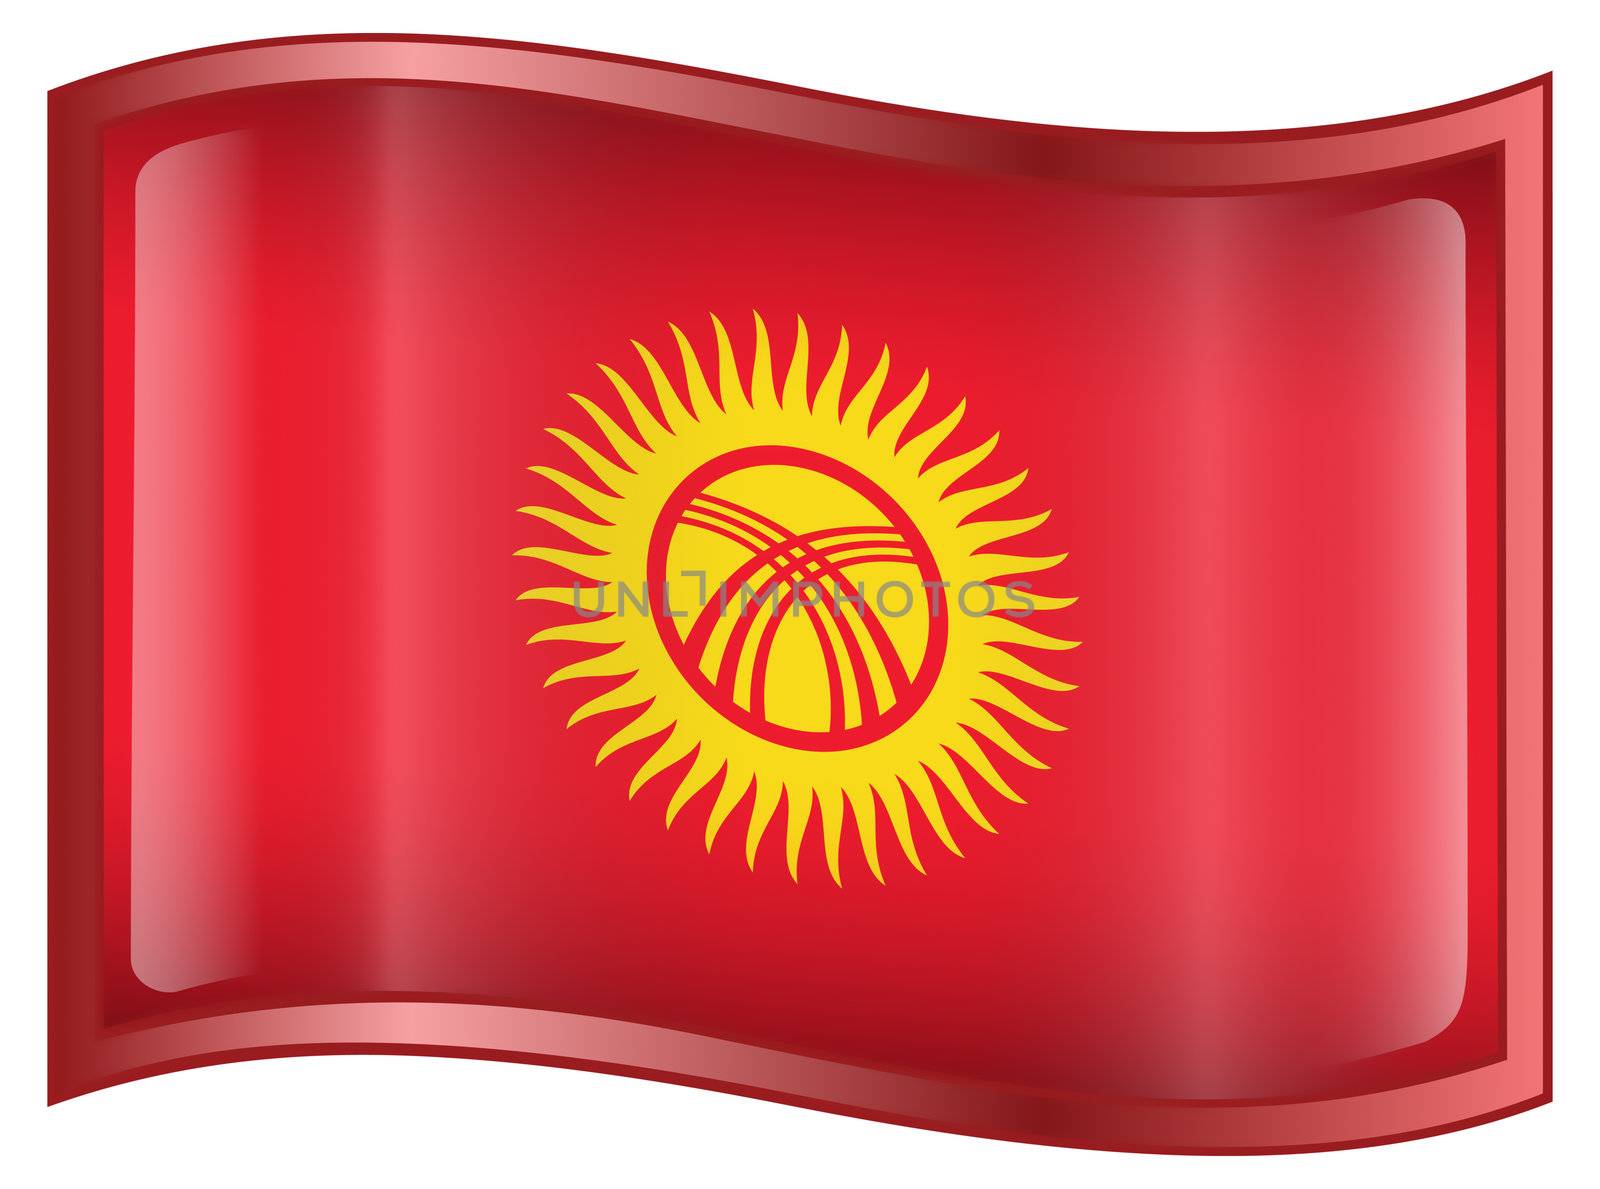 Kyrgyzstan Flag icon, isolated on white background.